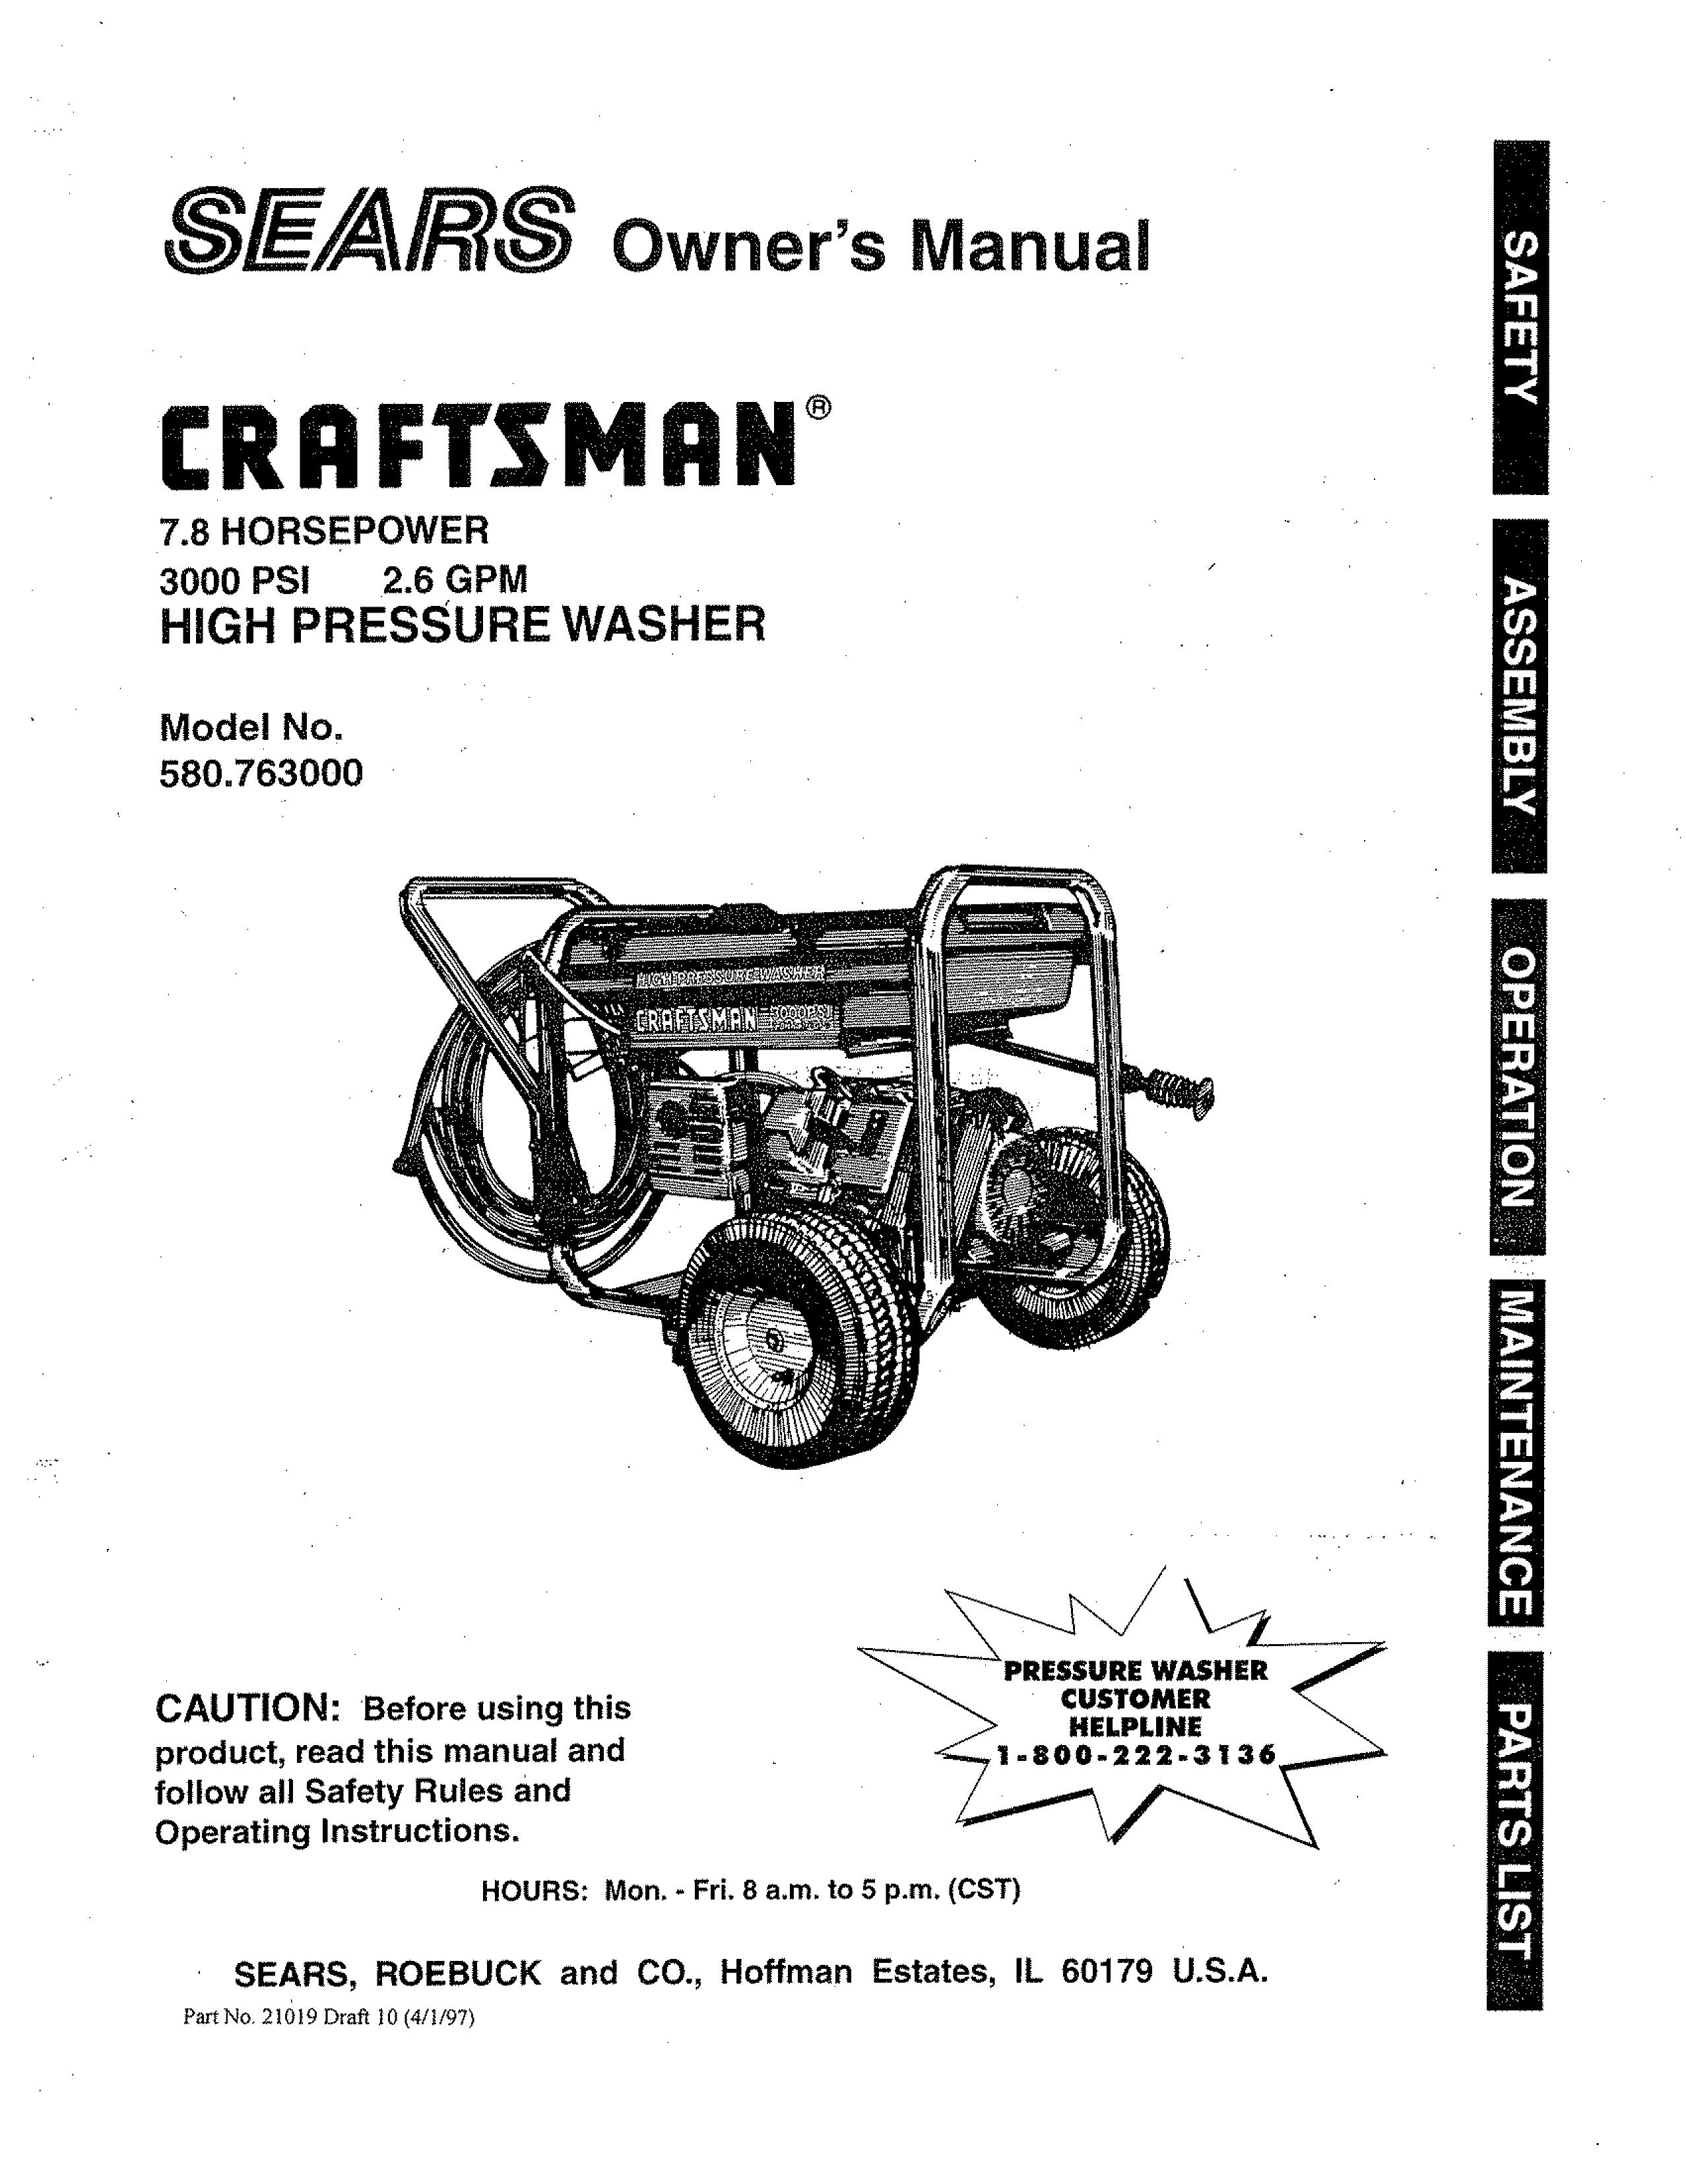 Craftsman 580.763 Pressure Washer User Manual